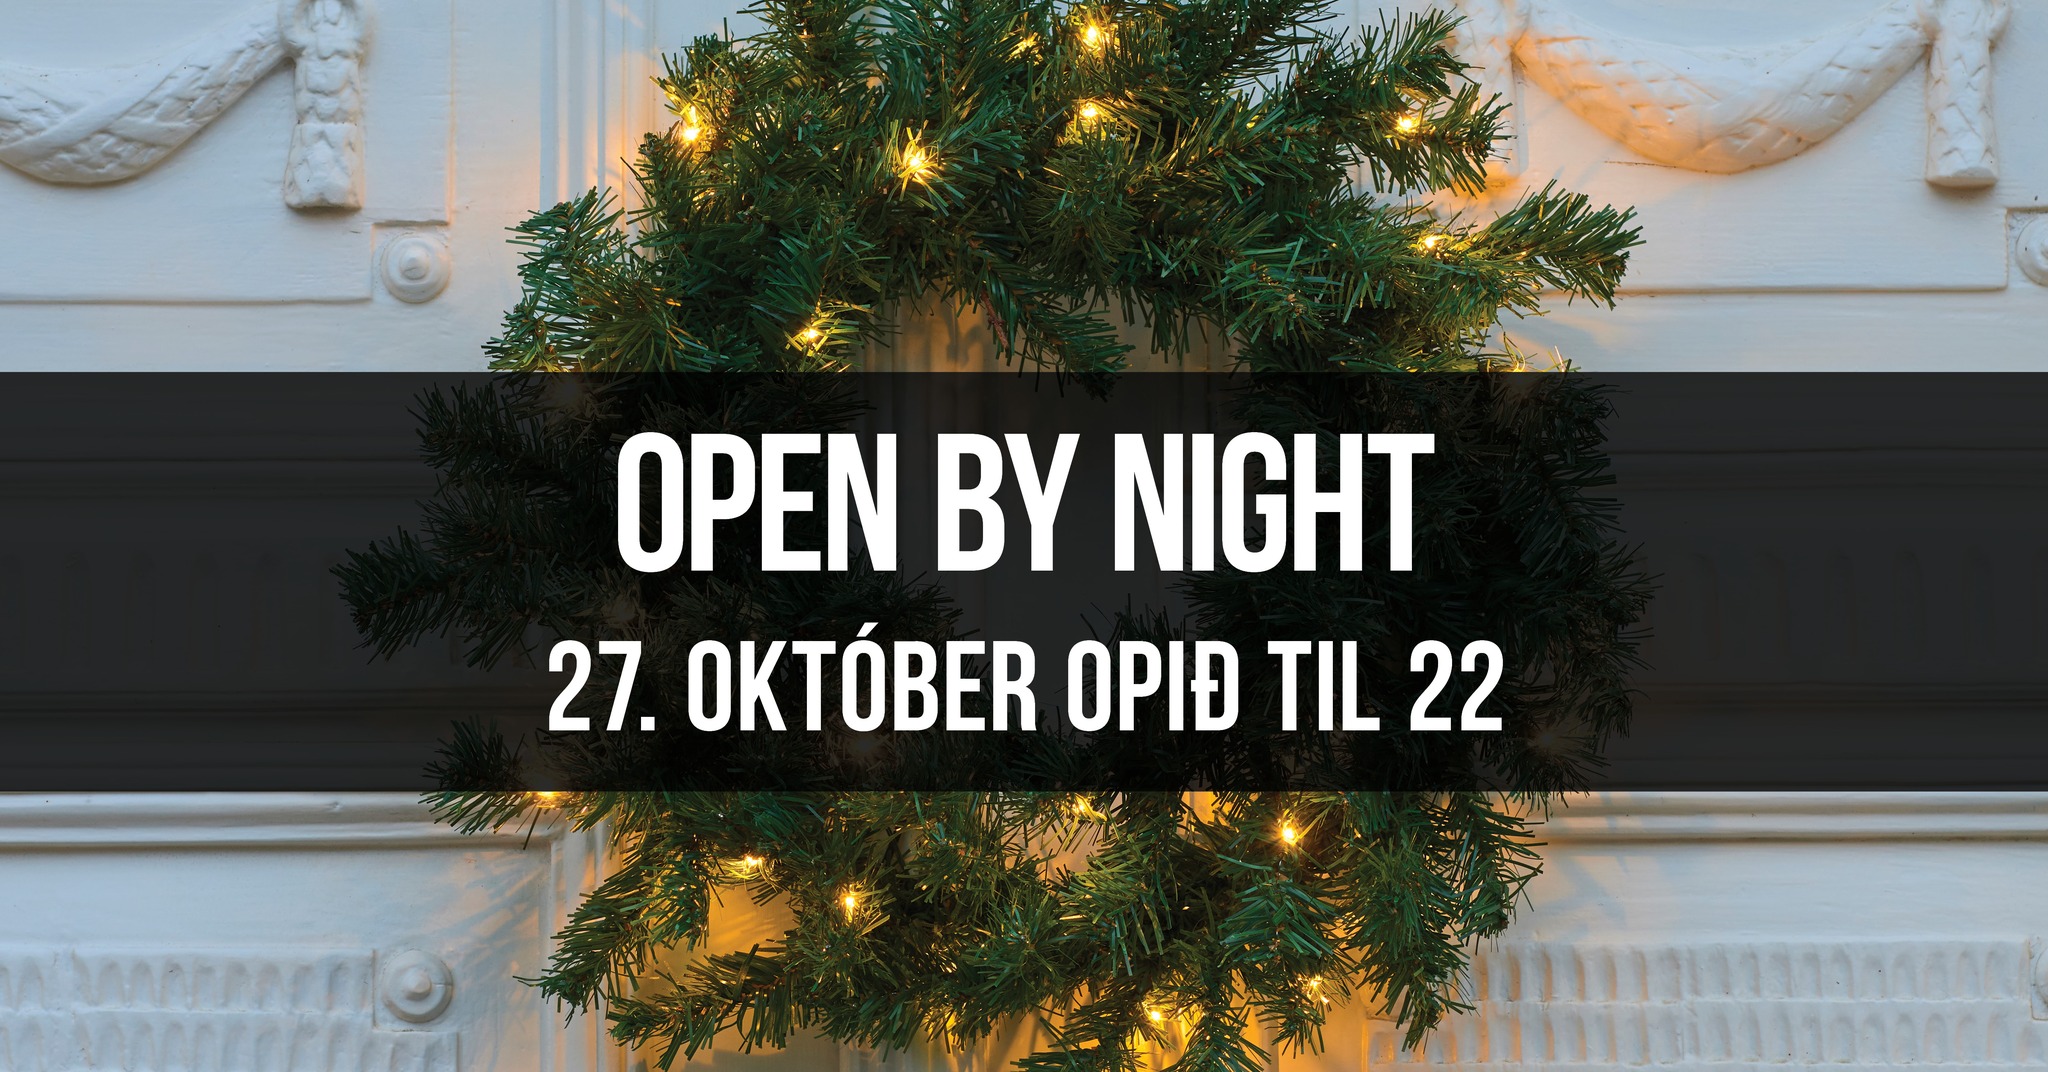 ILVA þjófstartar jólunum á Open by Night kvöldi